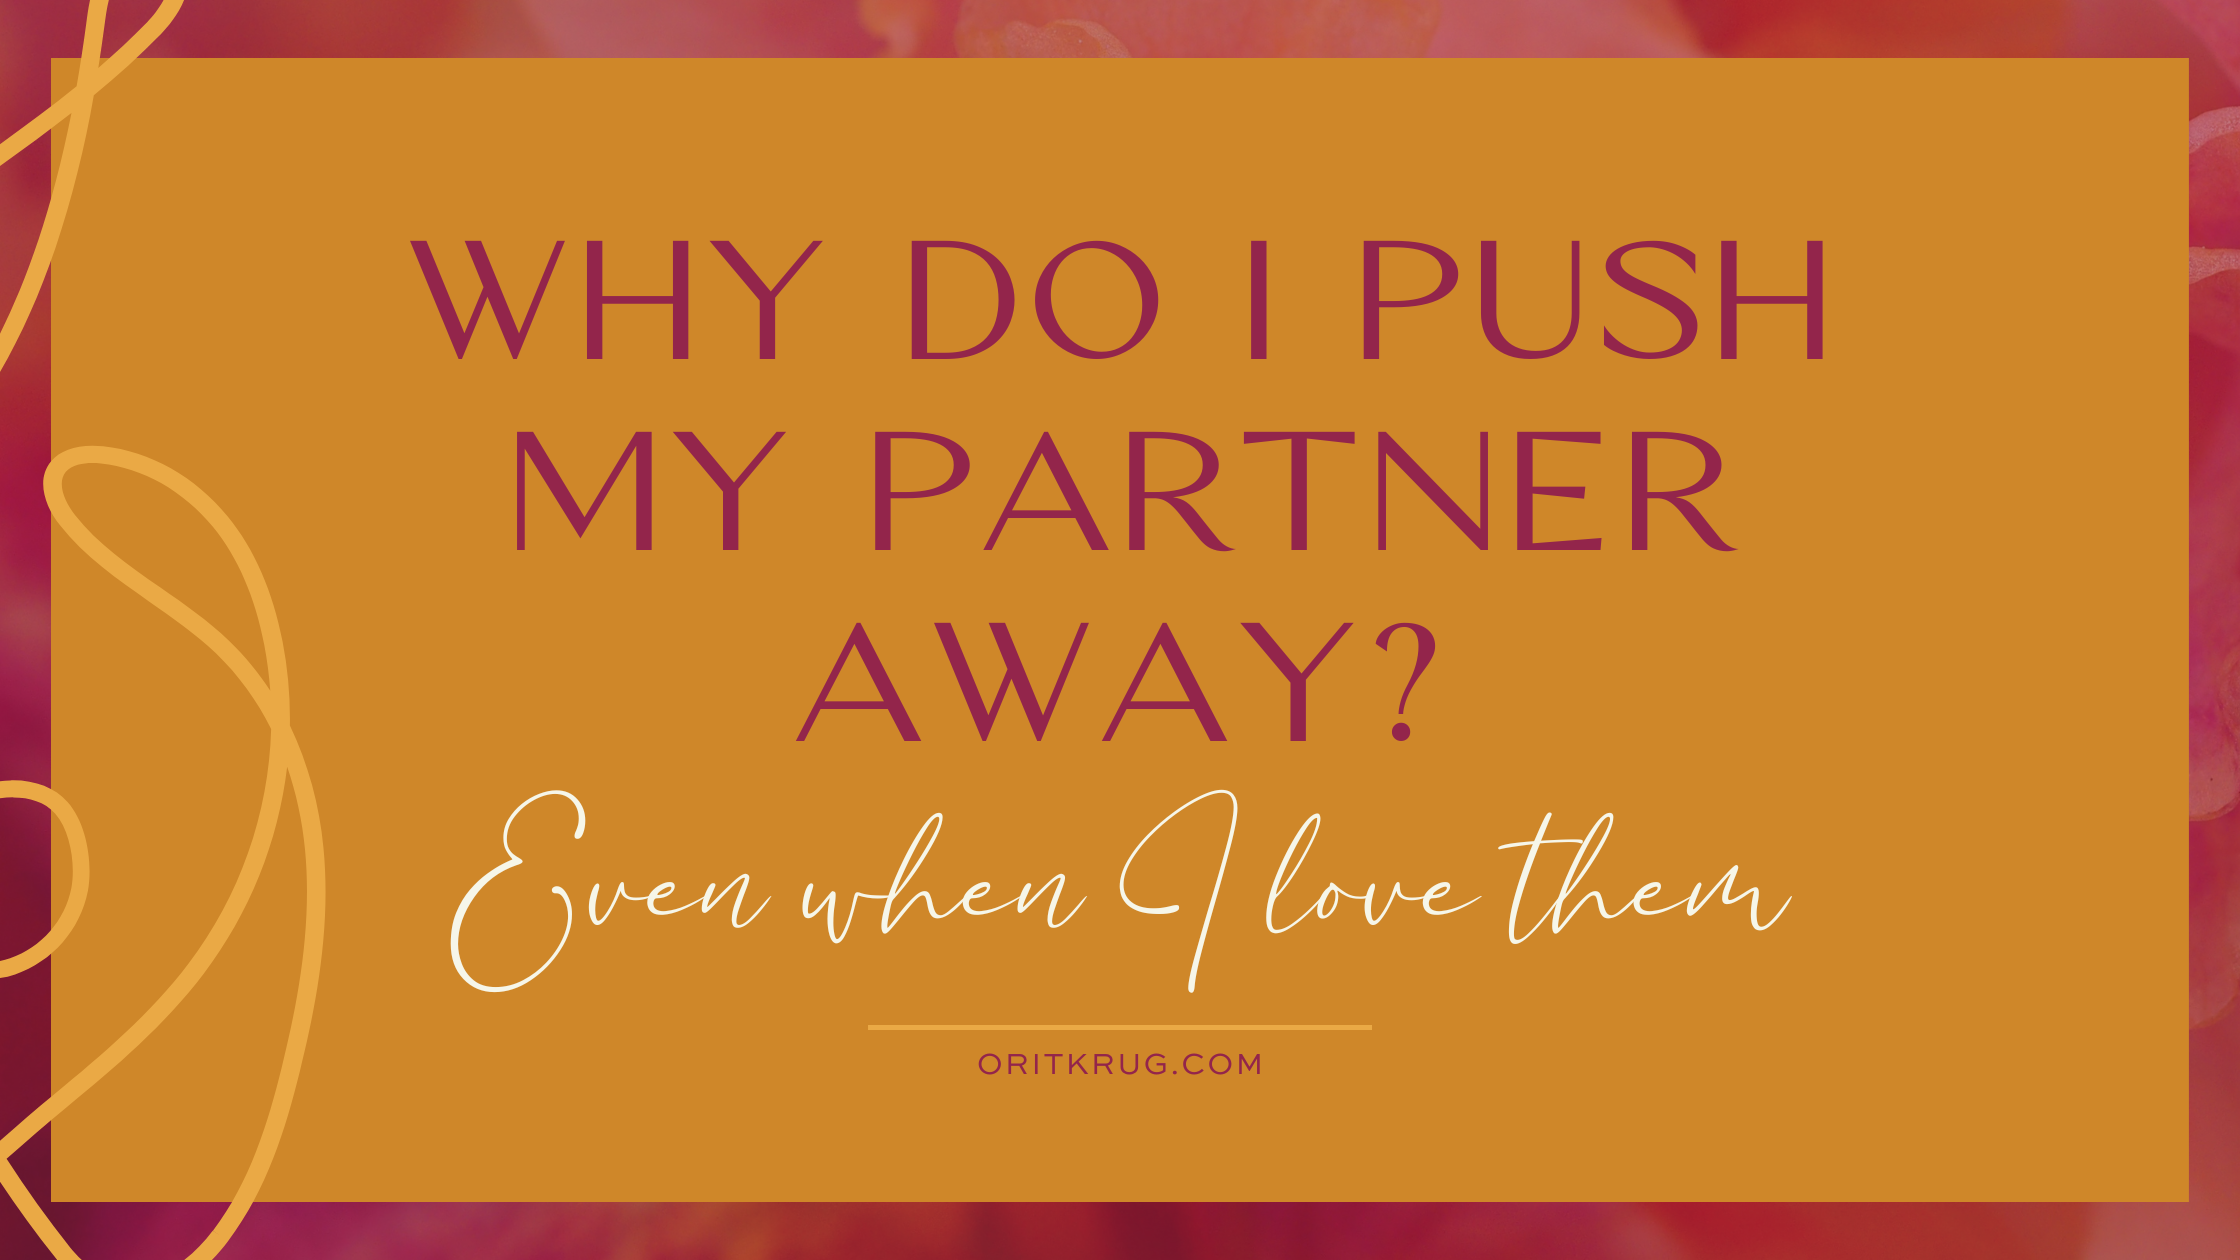 Push partner away